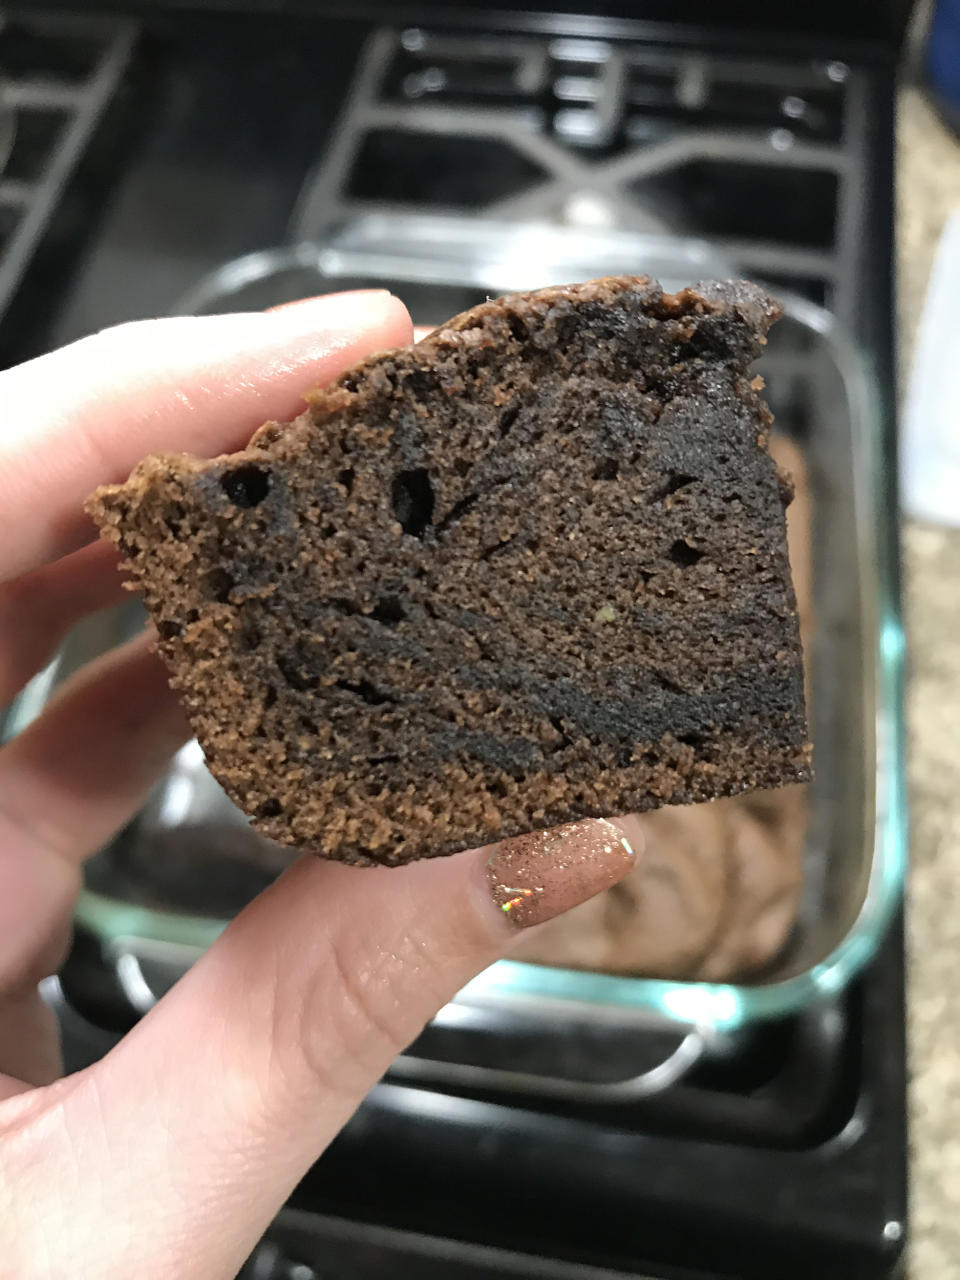 A brownie mix with added avocado created an interesting, sponge-like texture. (Rheana Murray / TODAY)